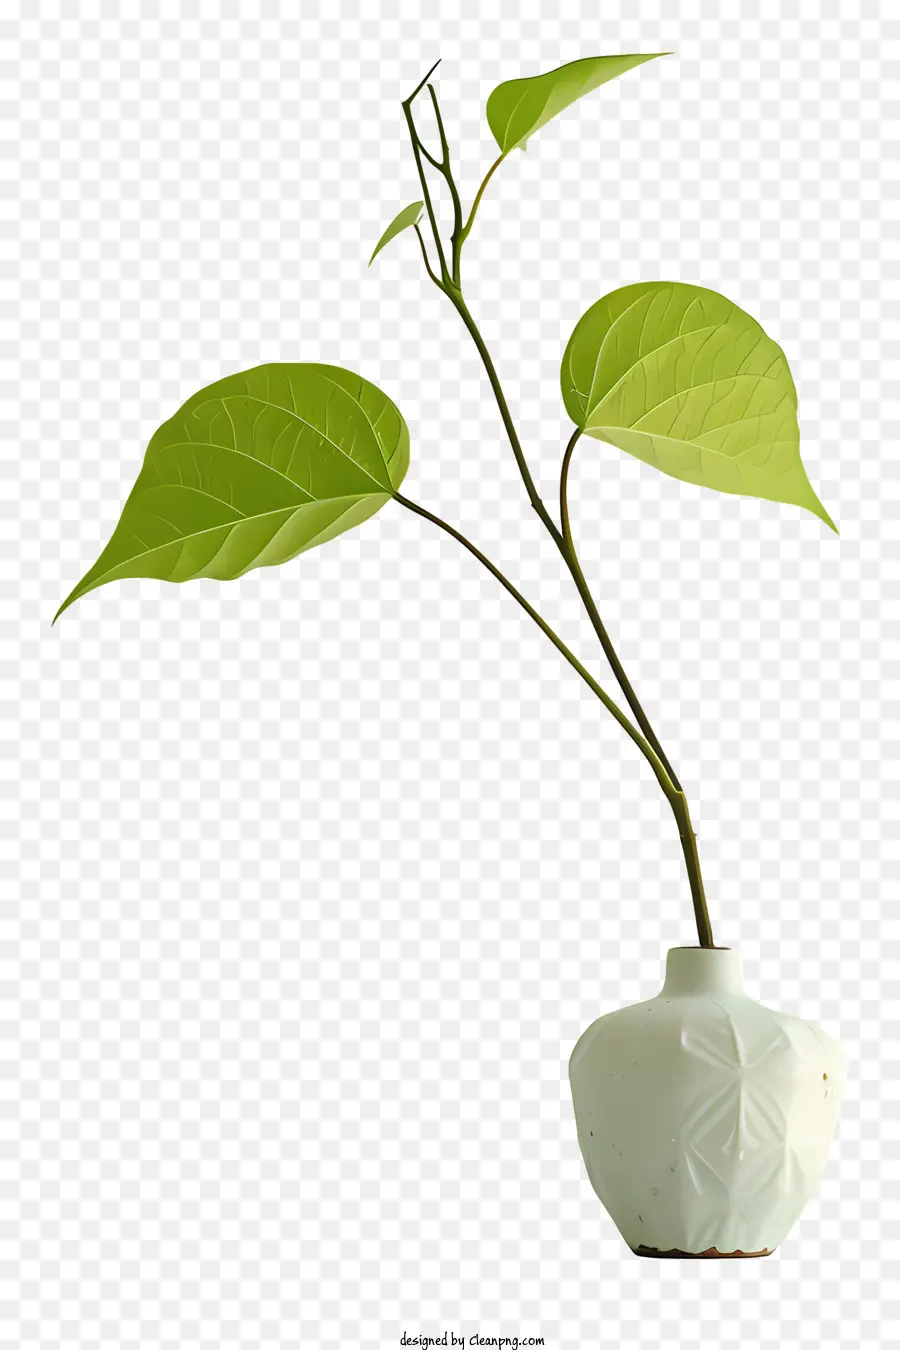 vase plant vase green plant small plant artistic plant representation